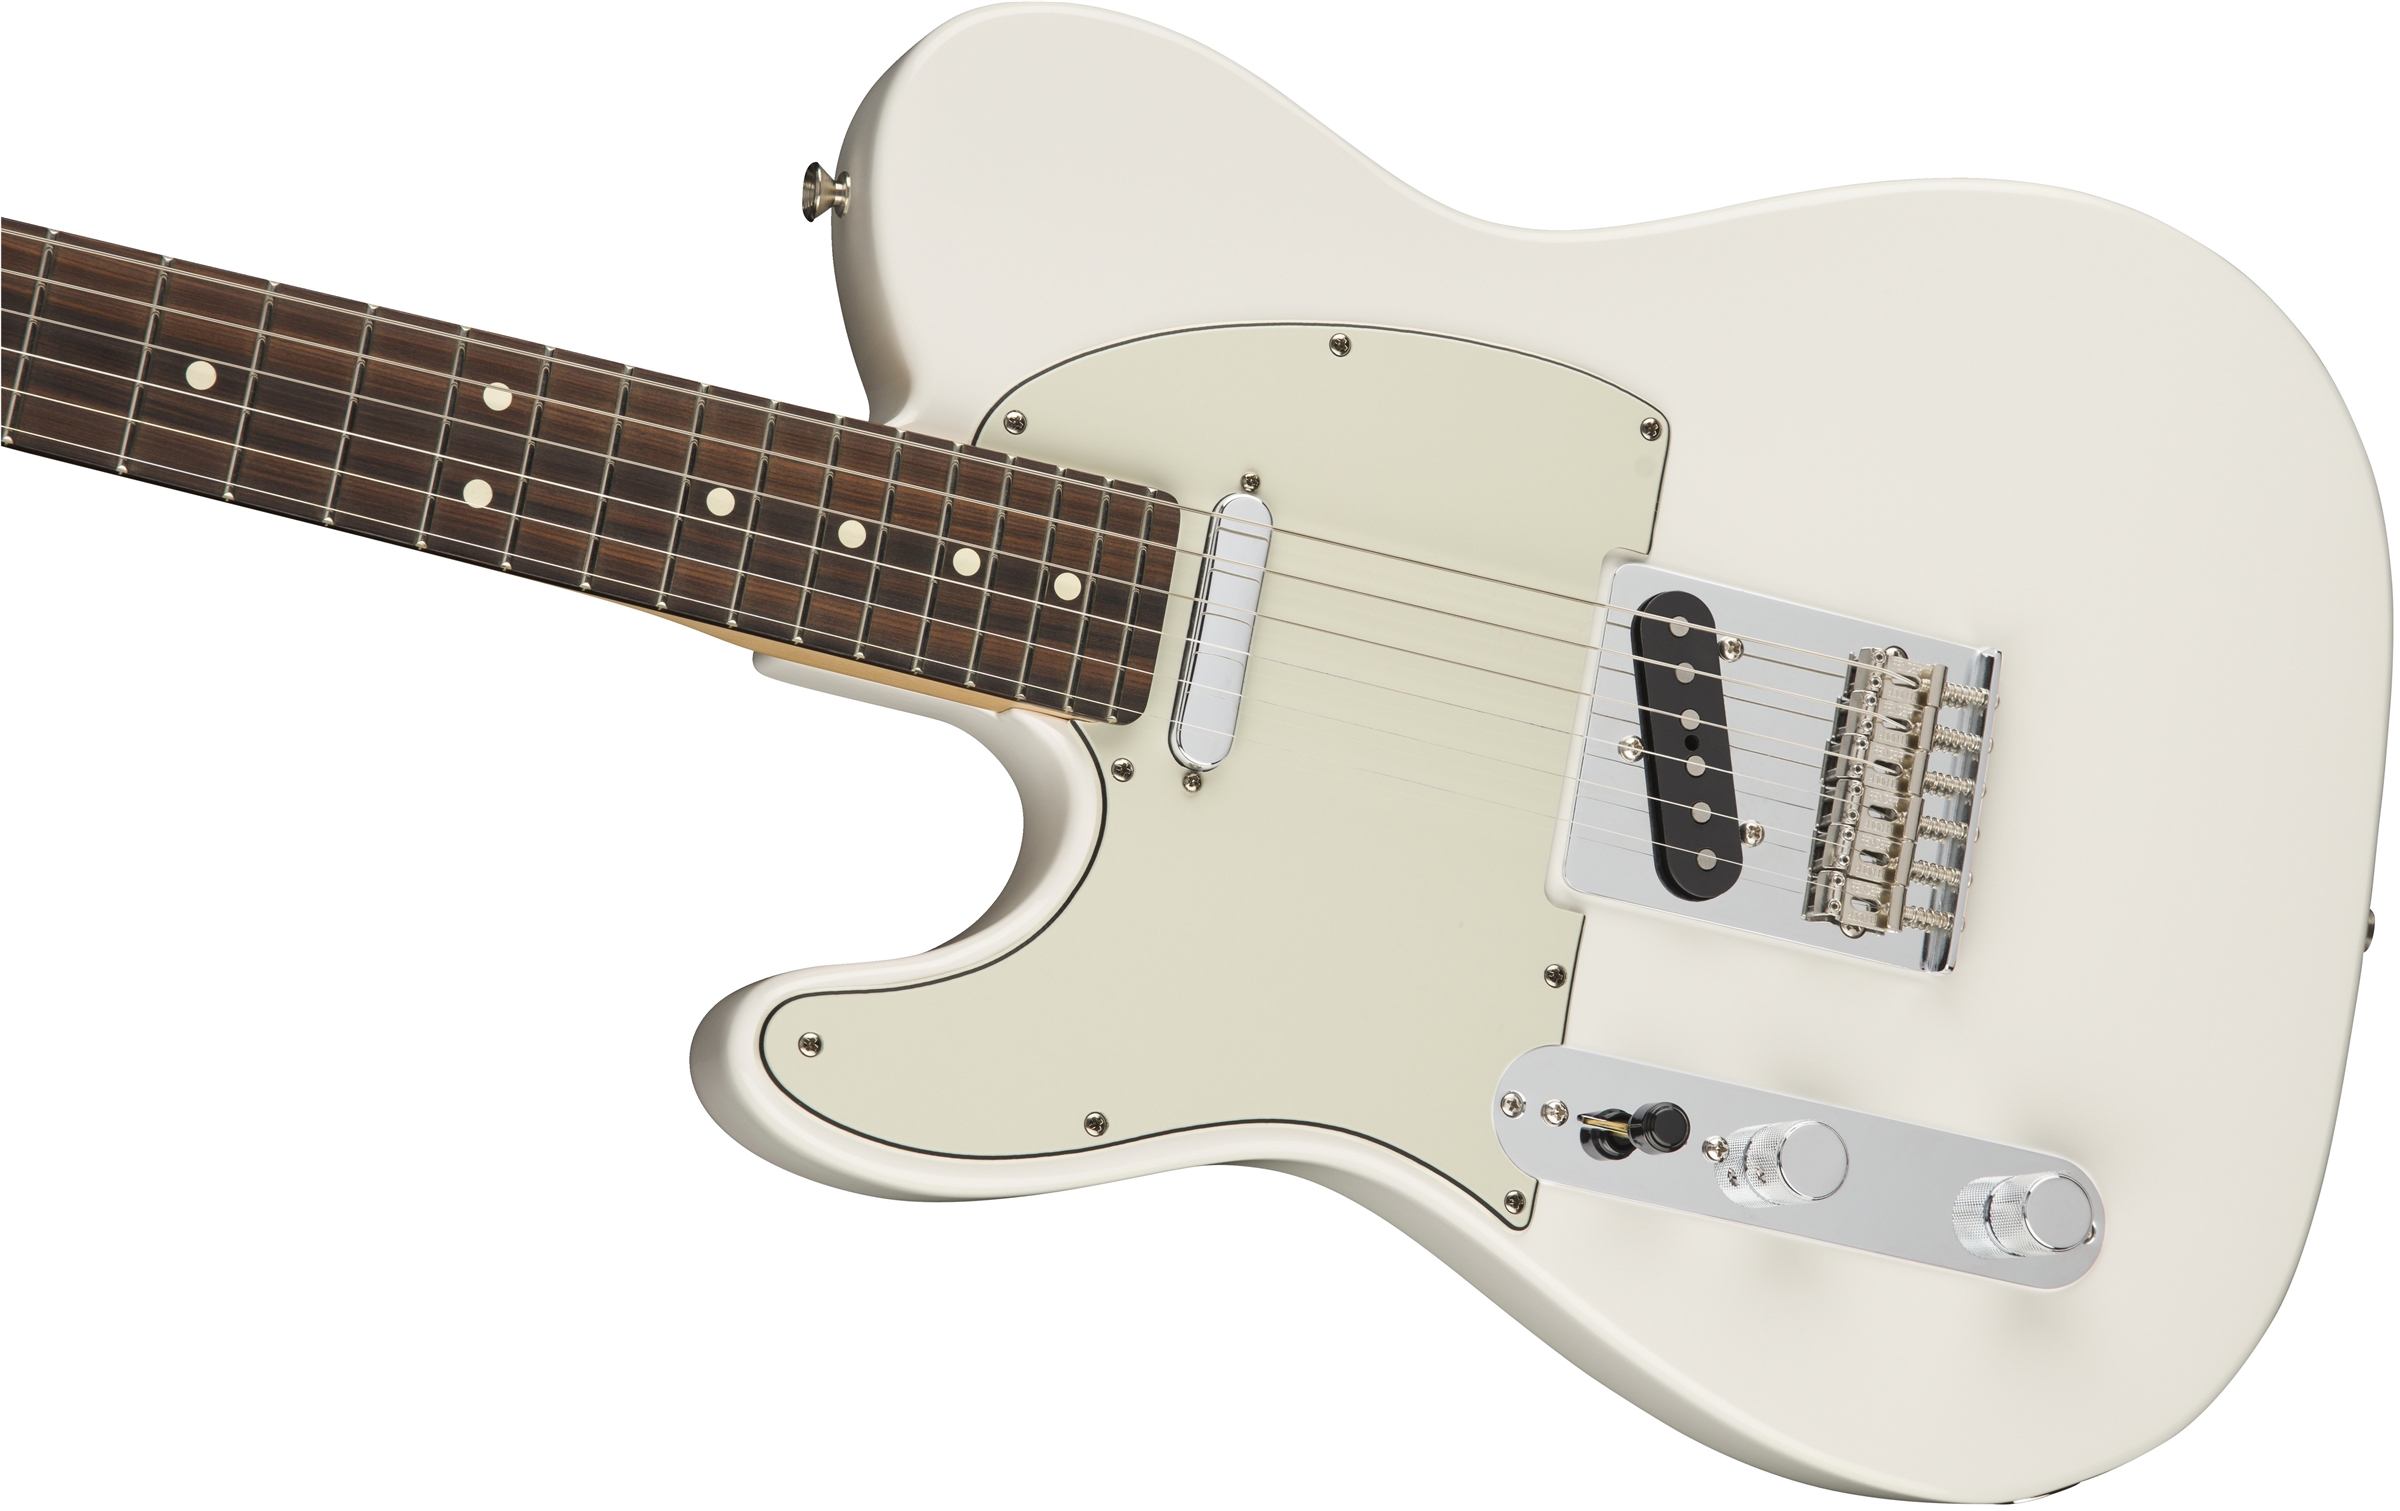 Fender Tele Player Lh Gaucher Mex Ss Pf - Polar White - Left-handed electric guitar - Variation 3